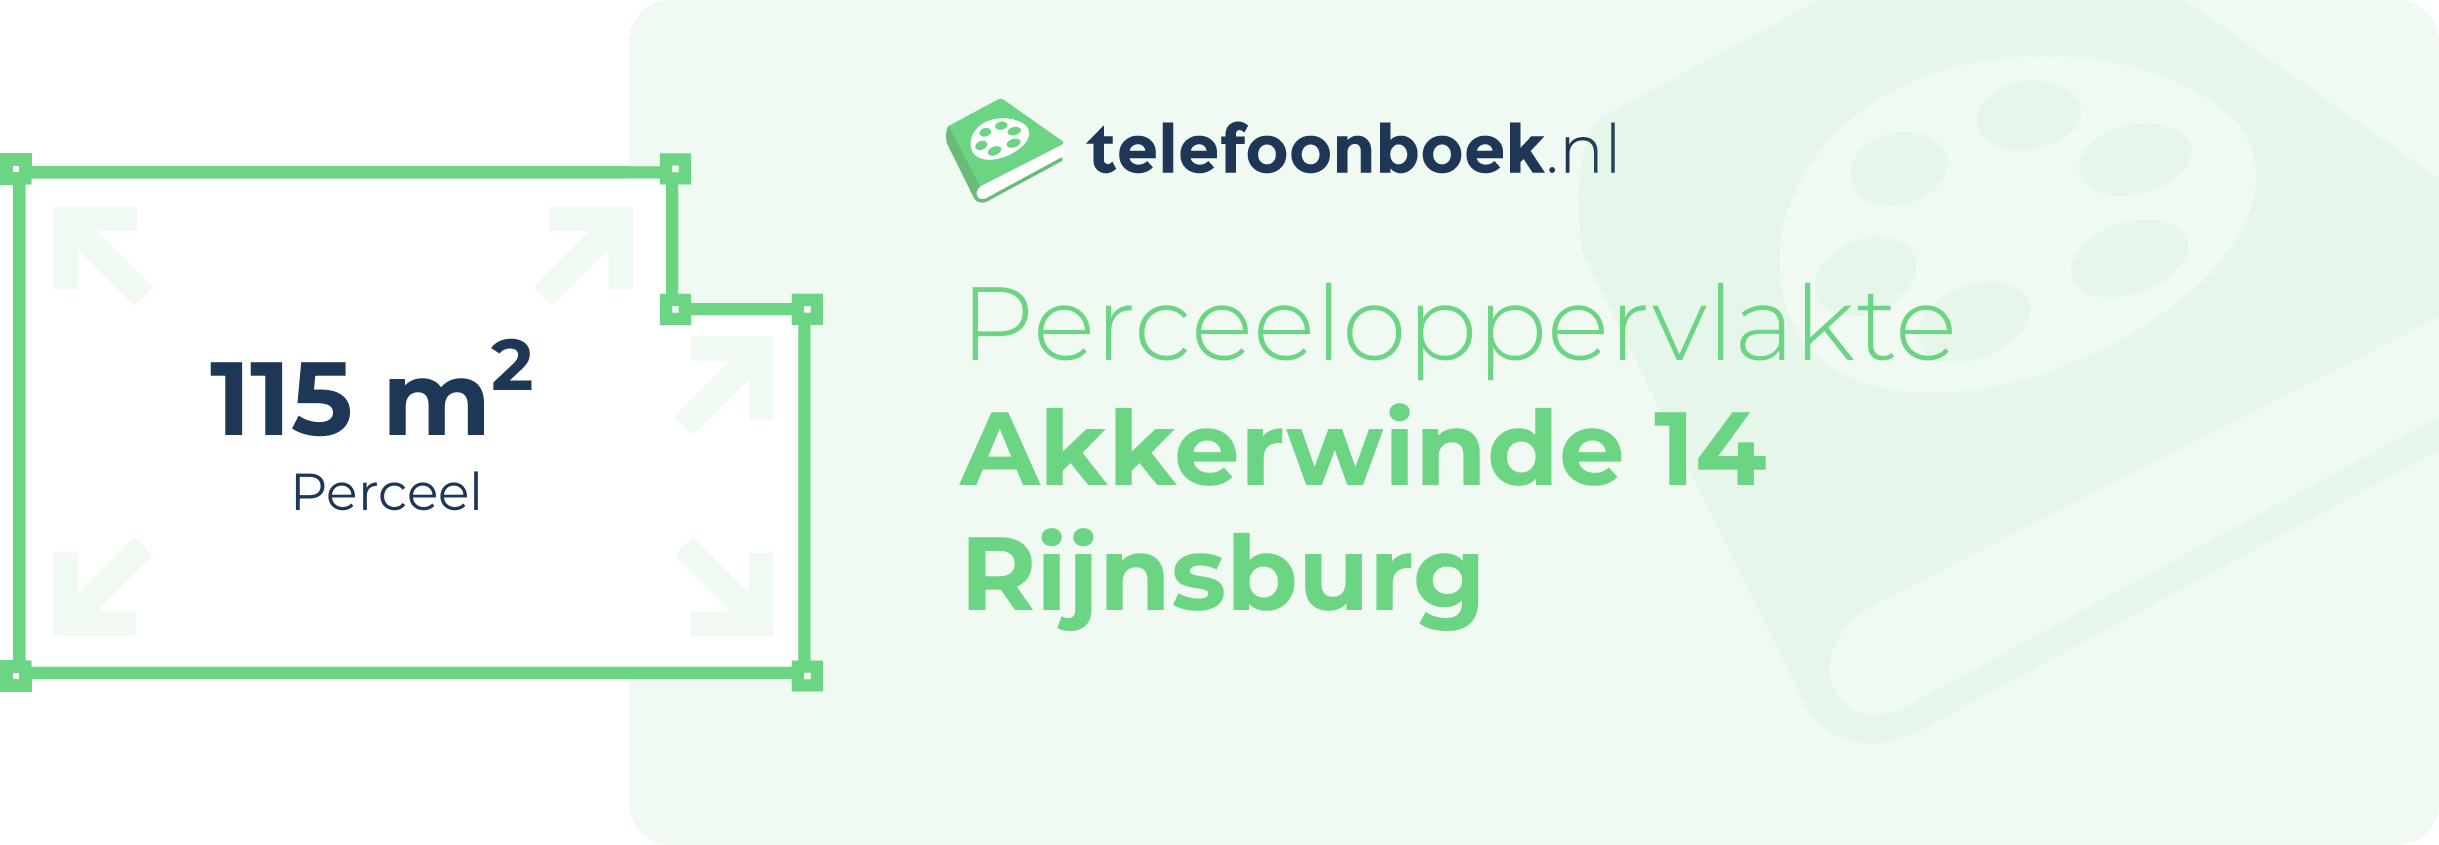 Perceeloppervlakte Akkerwinde 14 Rijnsburg